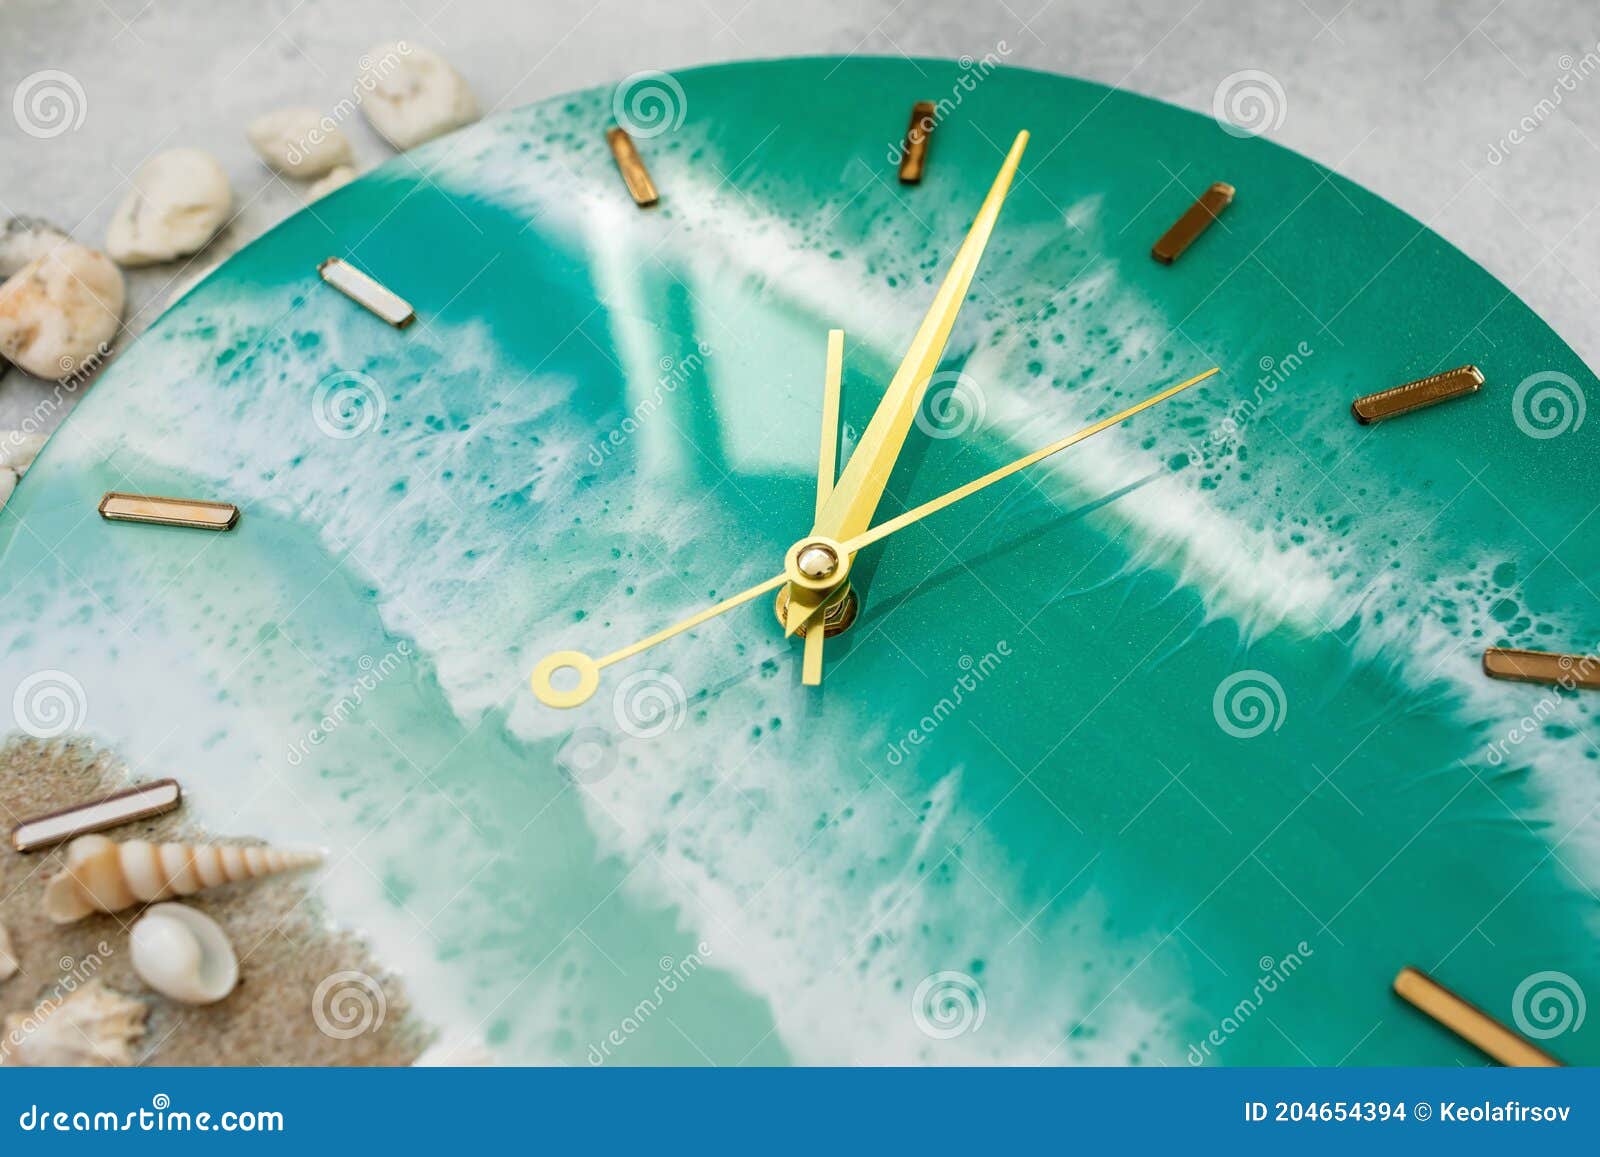 home decor ocean clock sea wave clock Resin art sea clock